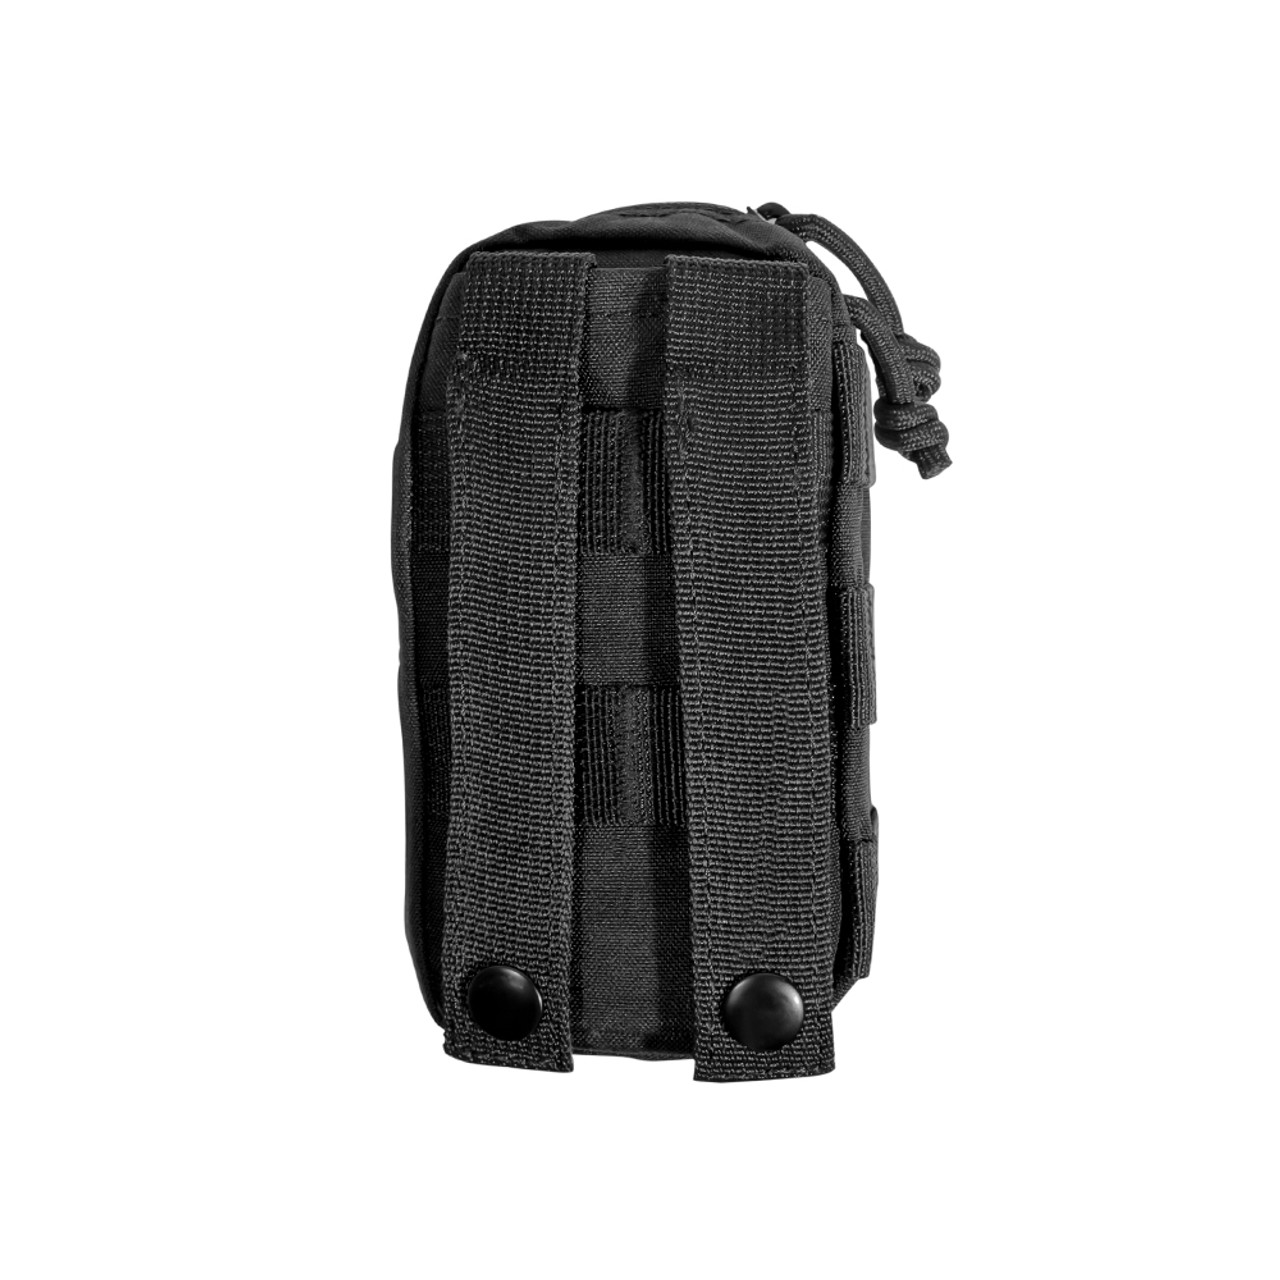 NAR Mini First Aid Kit Nylon Bags